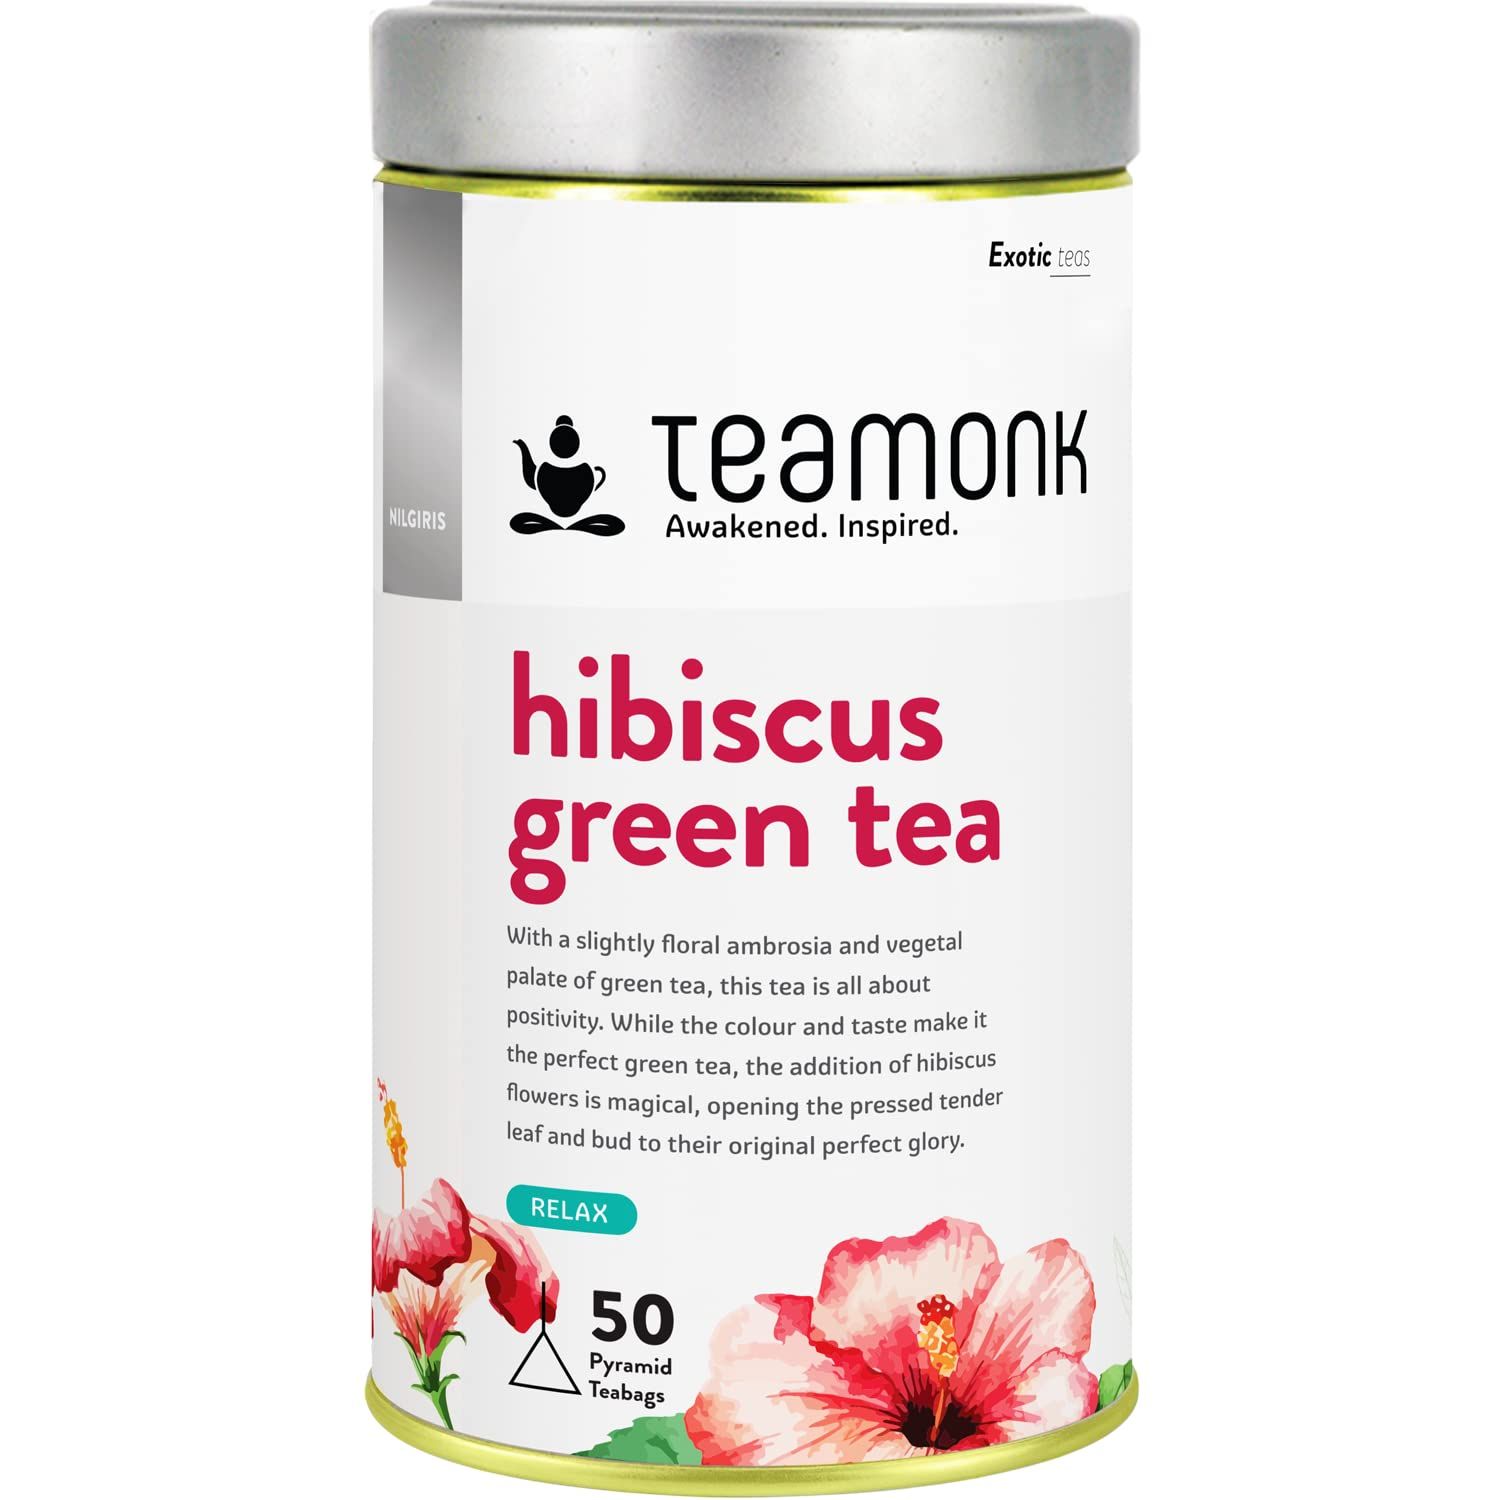 Teamonk Hibiscus Green Tea Image